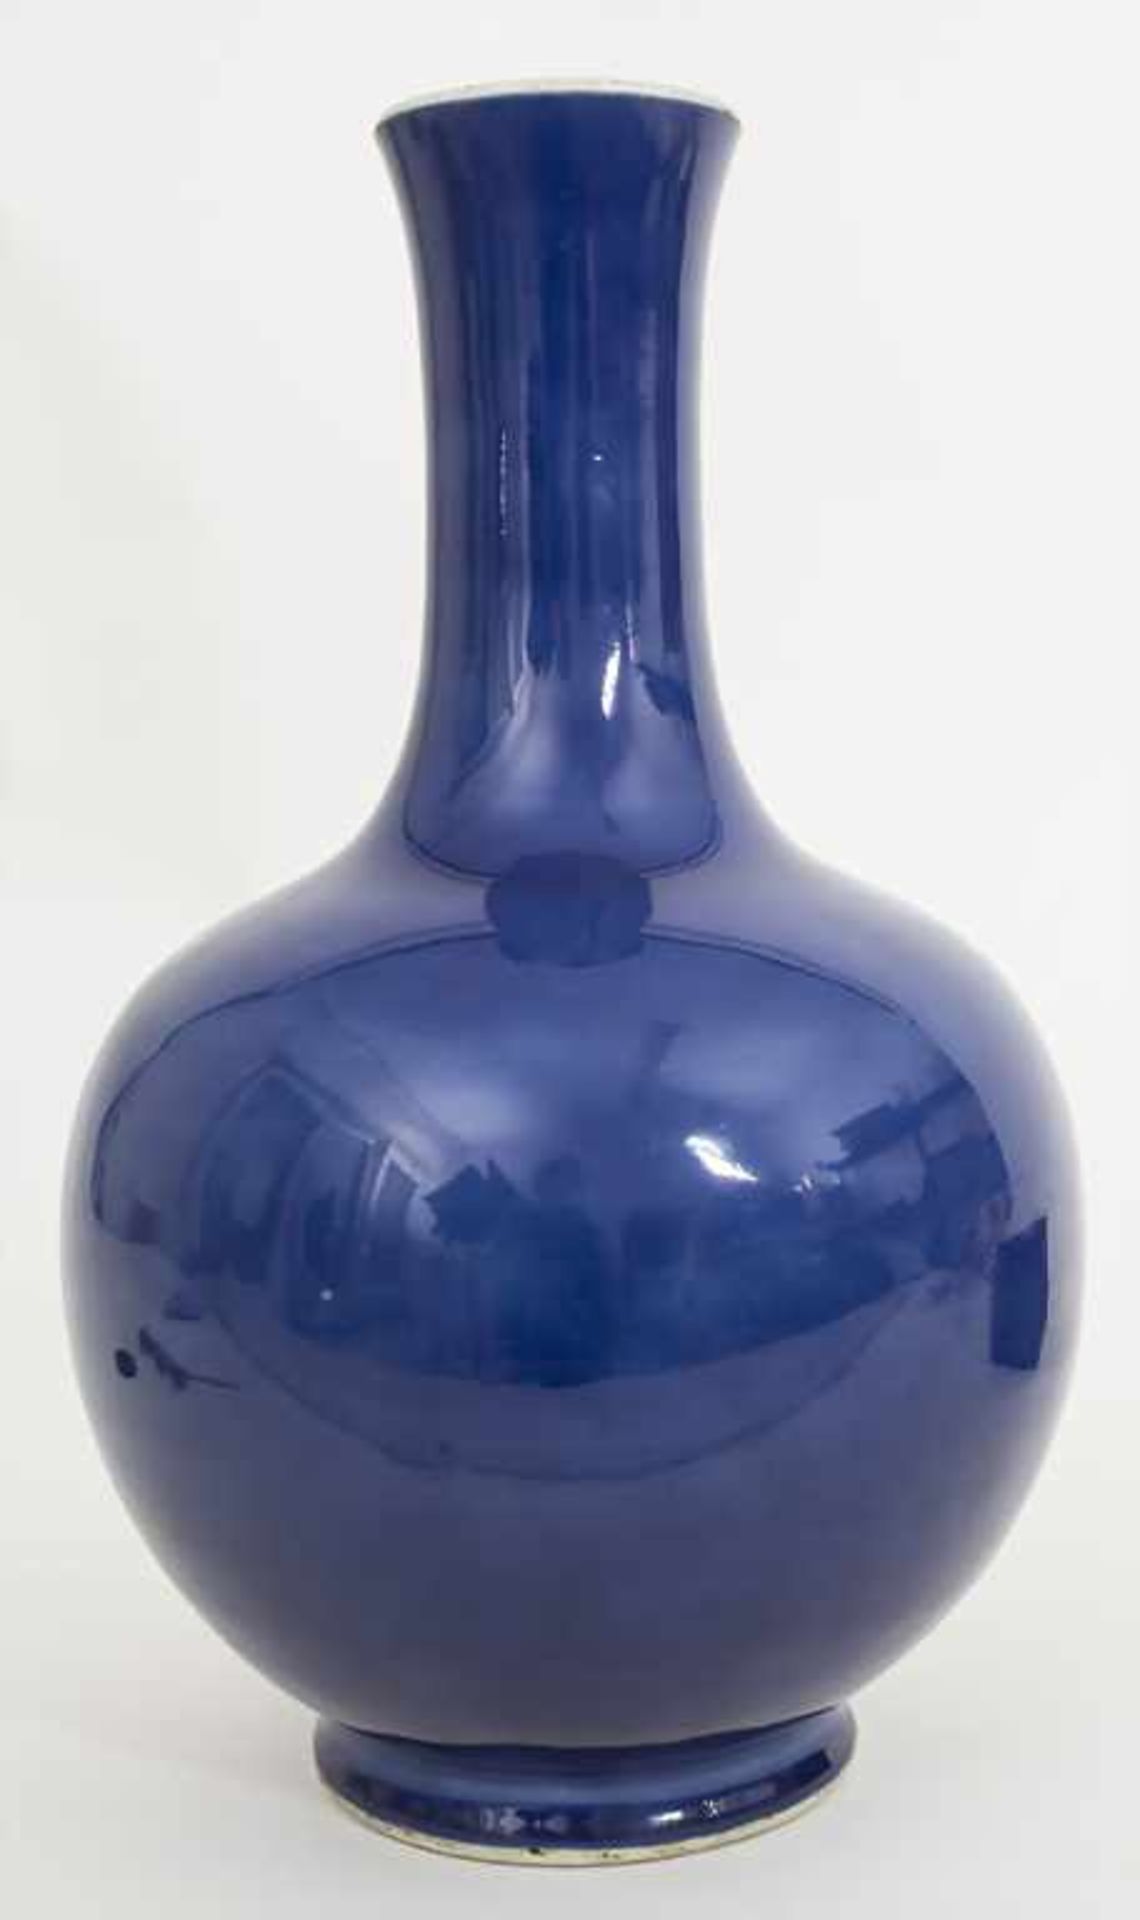 Puderblaue Porzellan-Vase / A powder blue porcelain vase, China, 18. Jh.Material: Porzellan,